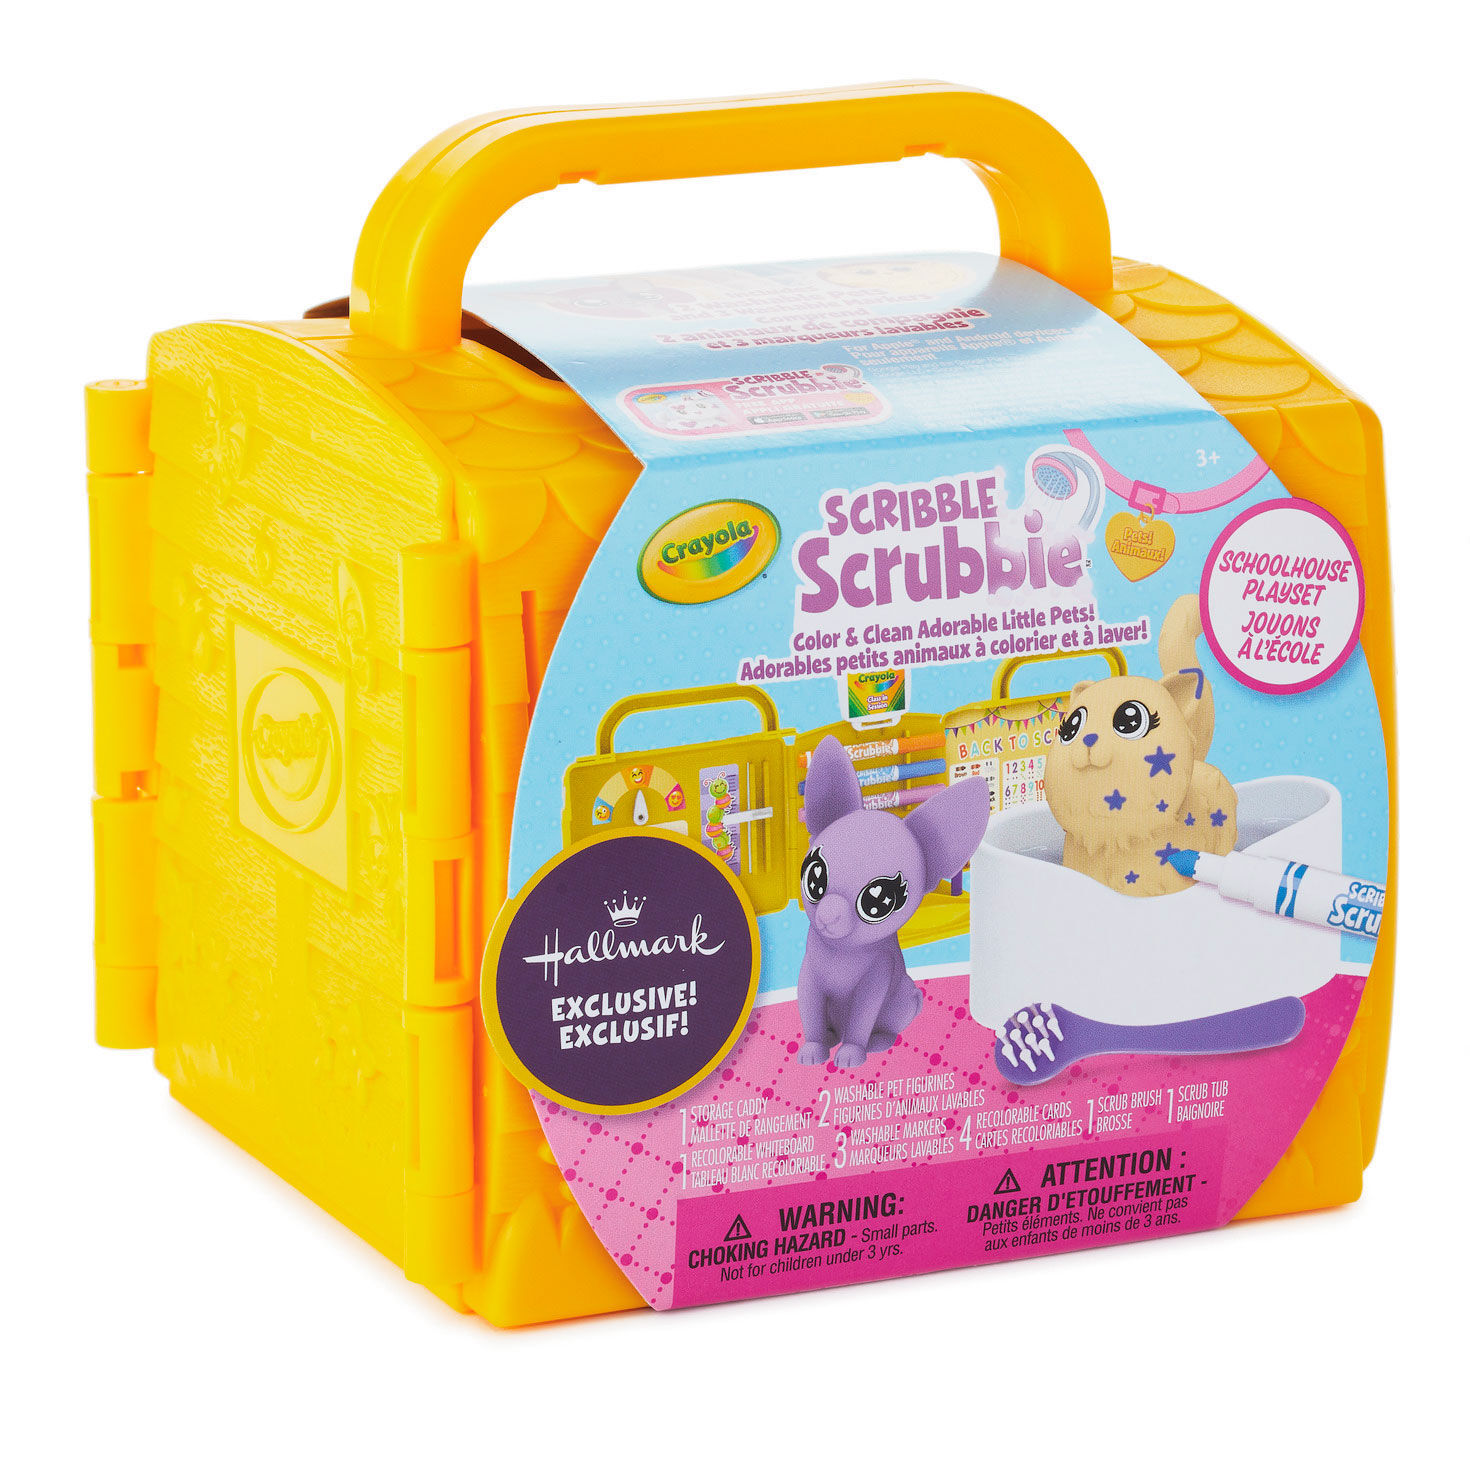 Crayola® Scribble Scrubbie Schoolhouse Play Set for only USD 19.99 | Hallmark